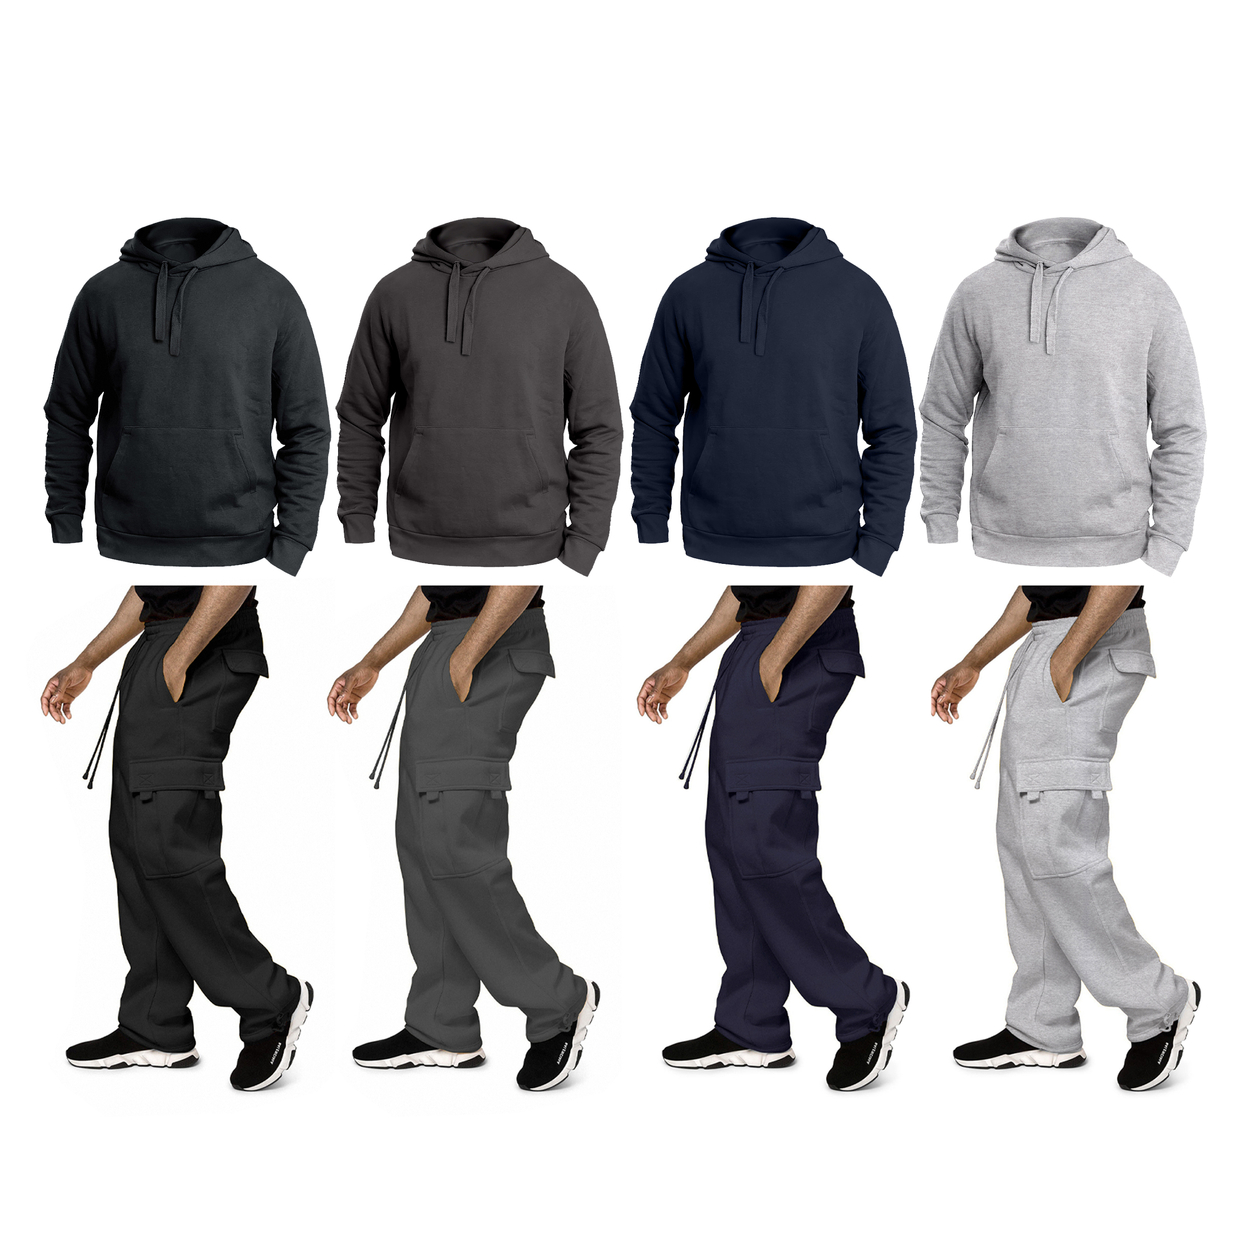 Men's Big & Tall Winter Warm Cozy Athletic Fleece Lined Multi-Pocket Cargo Sweatsuit - Charcoal, 3xl